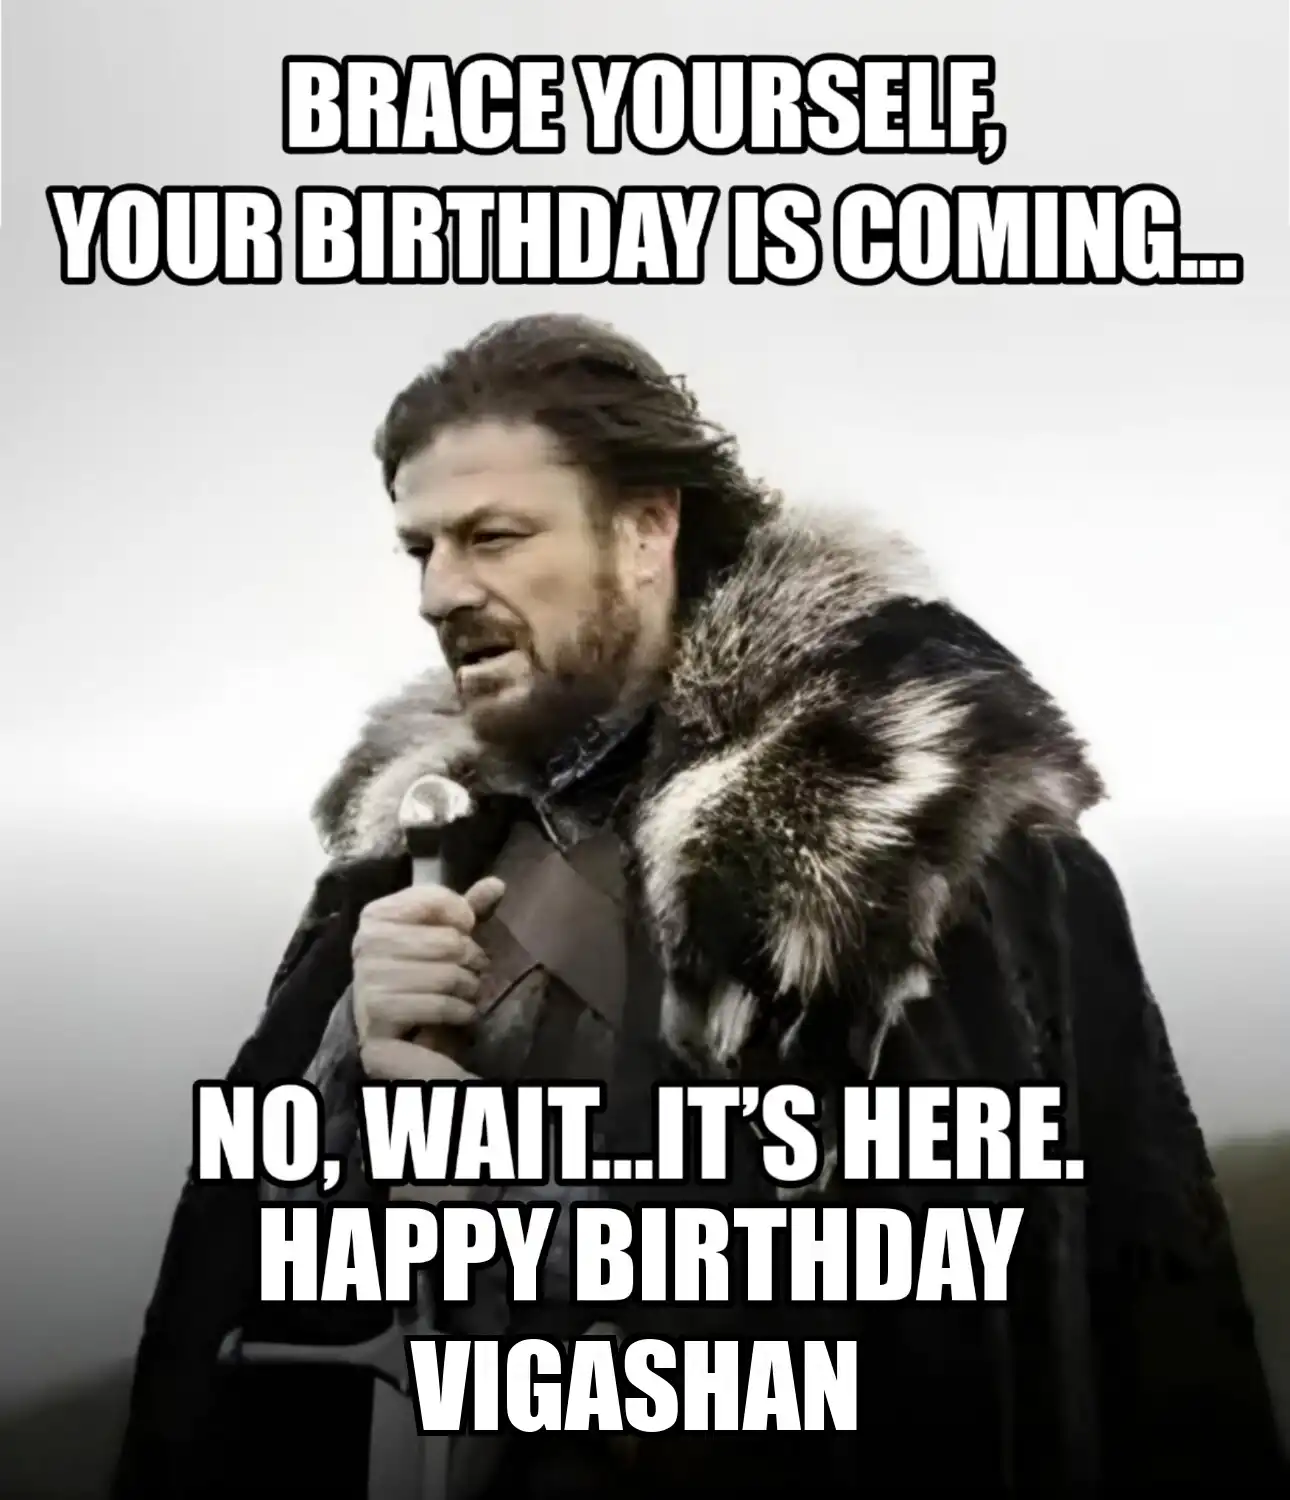 Happy Birthday Vigashan Brace Yourself Your Birthday Is Coming Meme